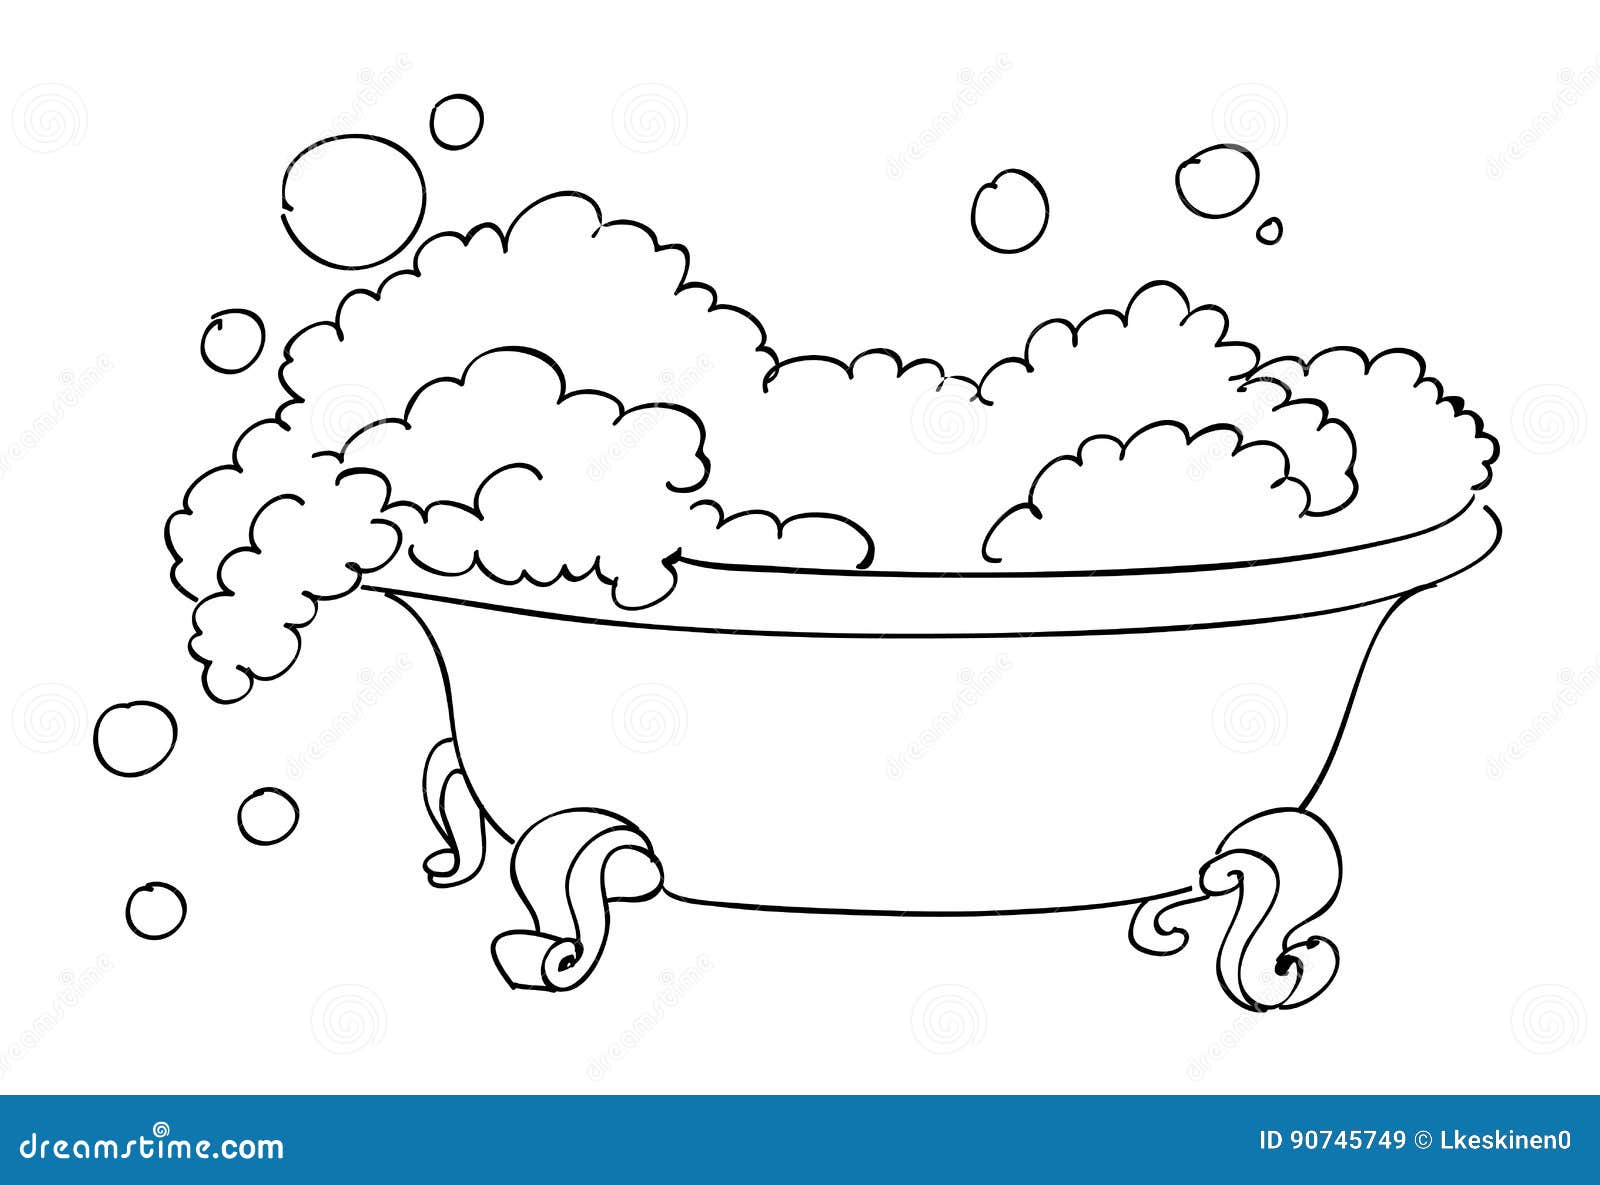 Cartoon image of bathtub stock vector. Illustration of retro - 90745749